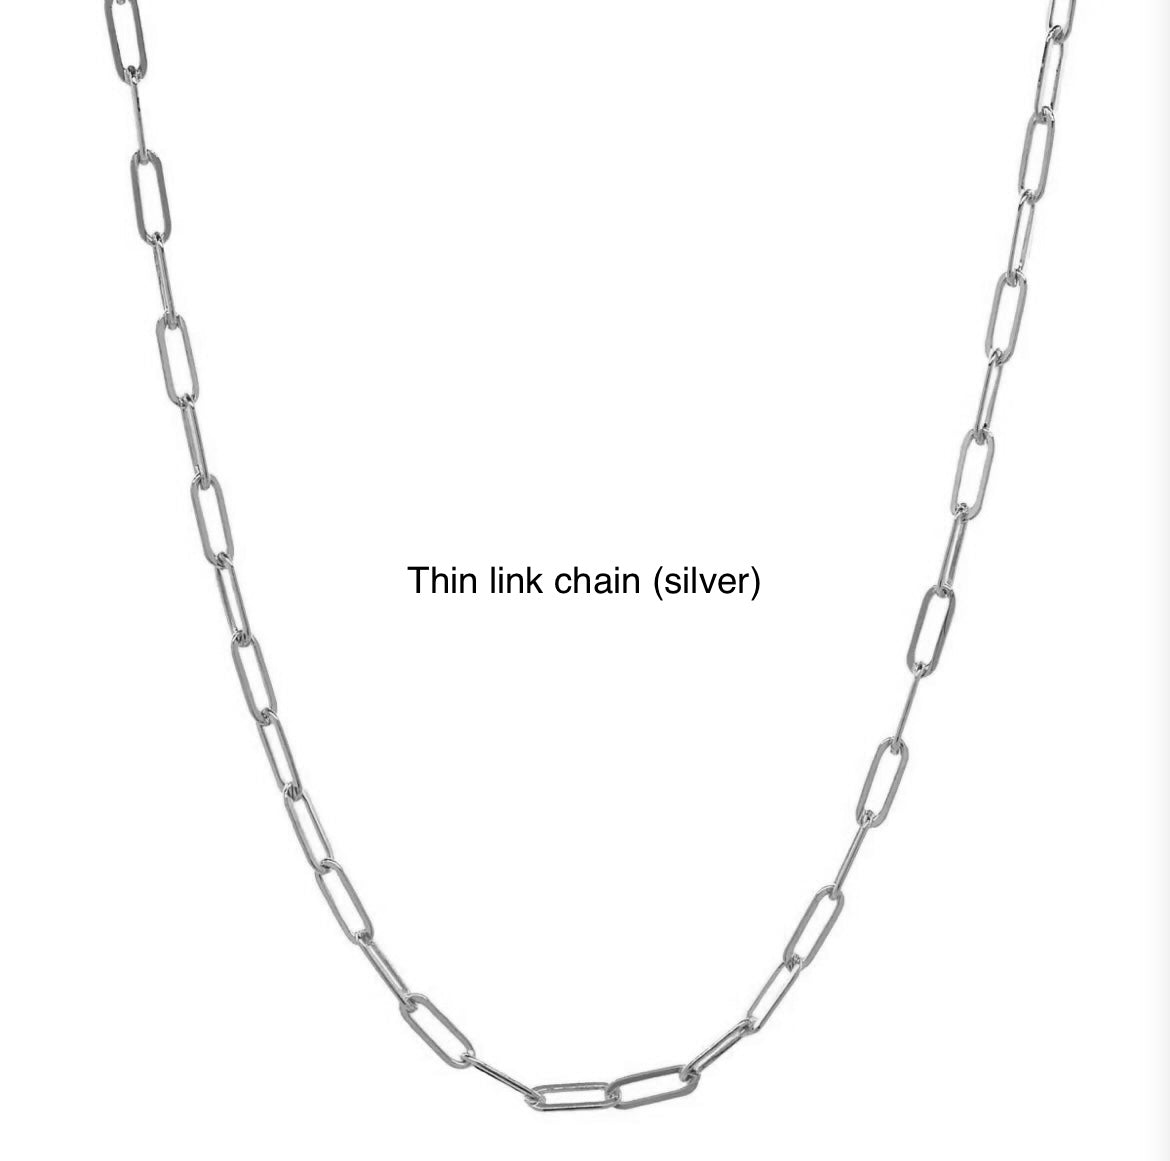 Thin link chain